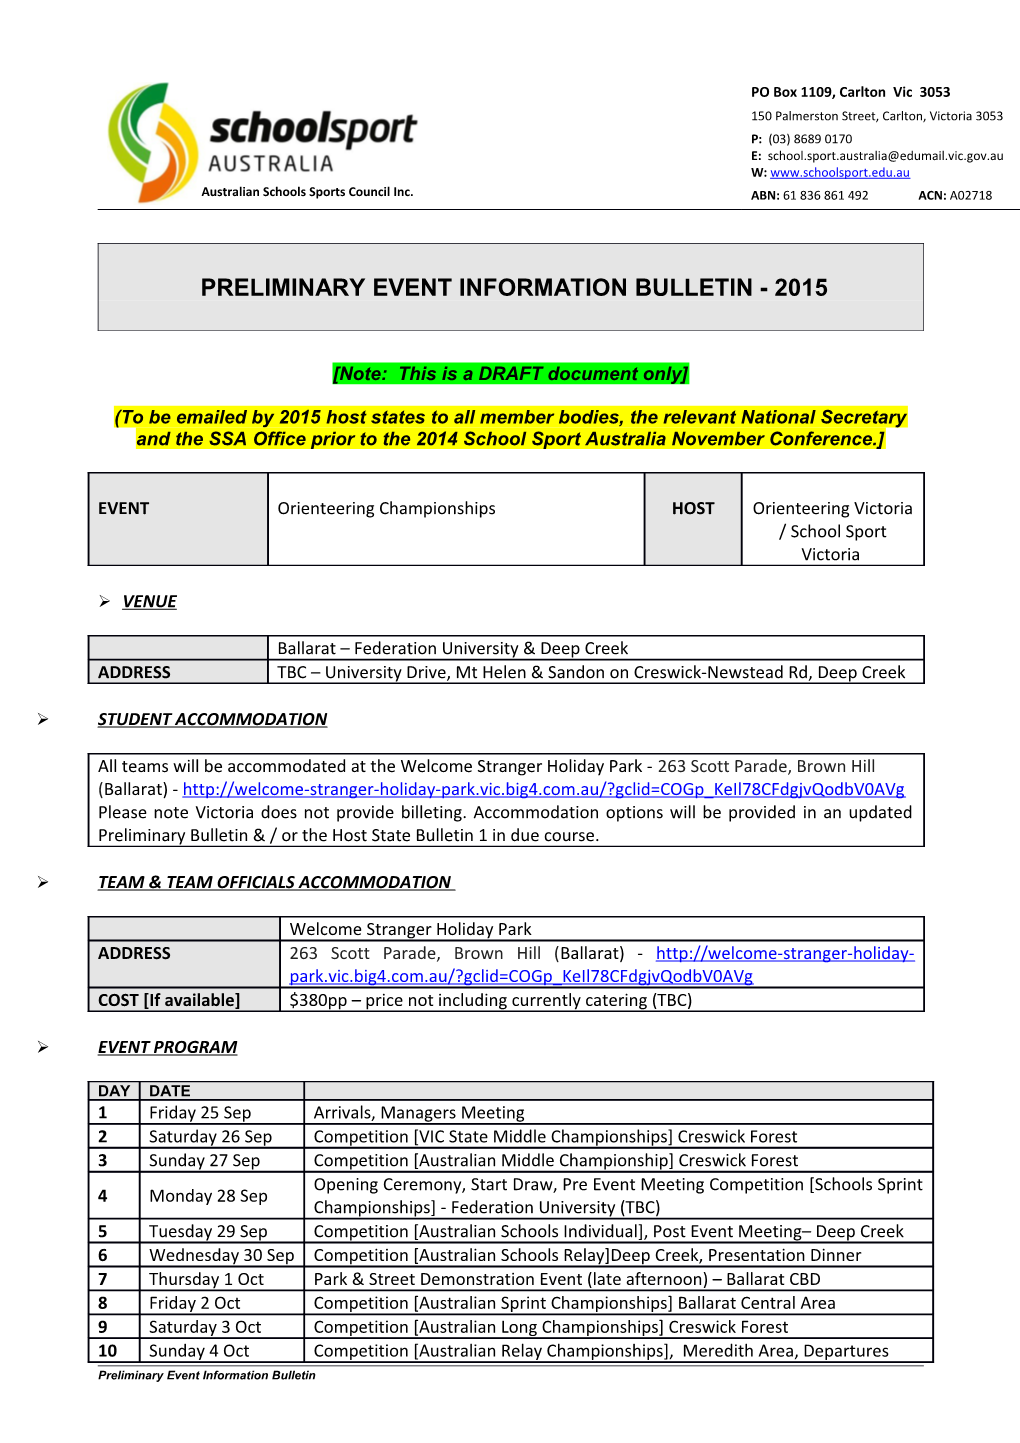 Preliminary Event Information Bulletin - 2015